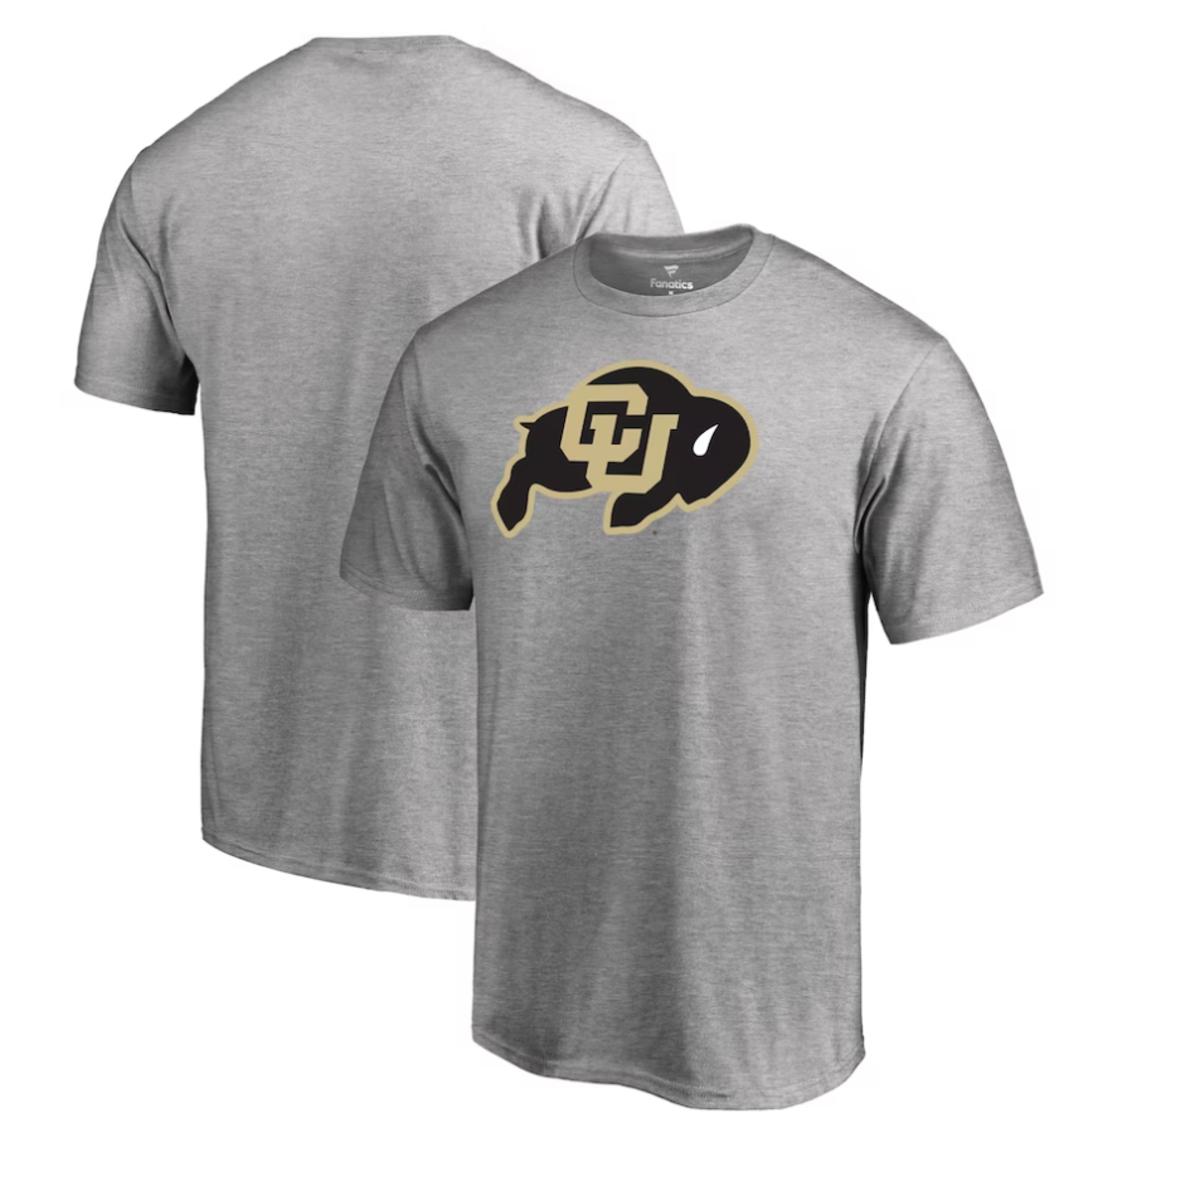 Colorado Buffaloes Fanatics Branded Primary Team Logo T-Shirt - $29.99